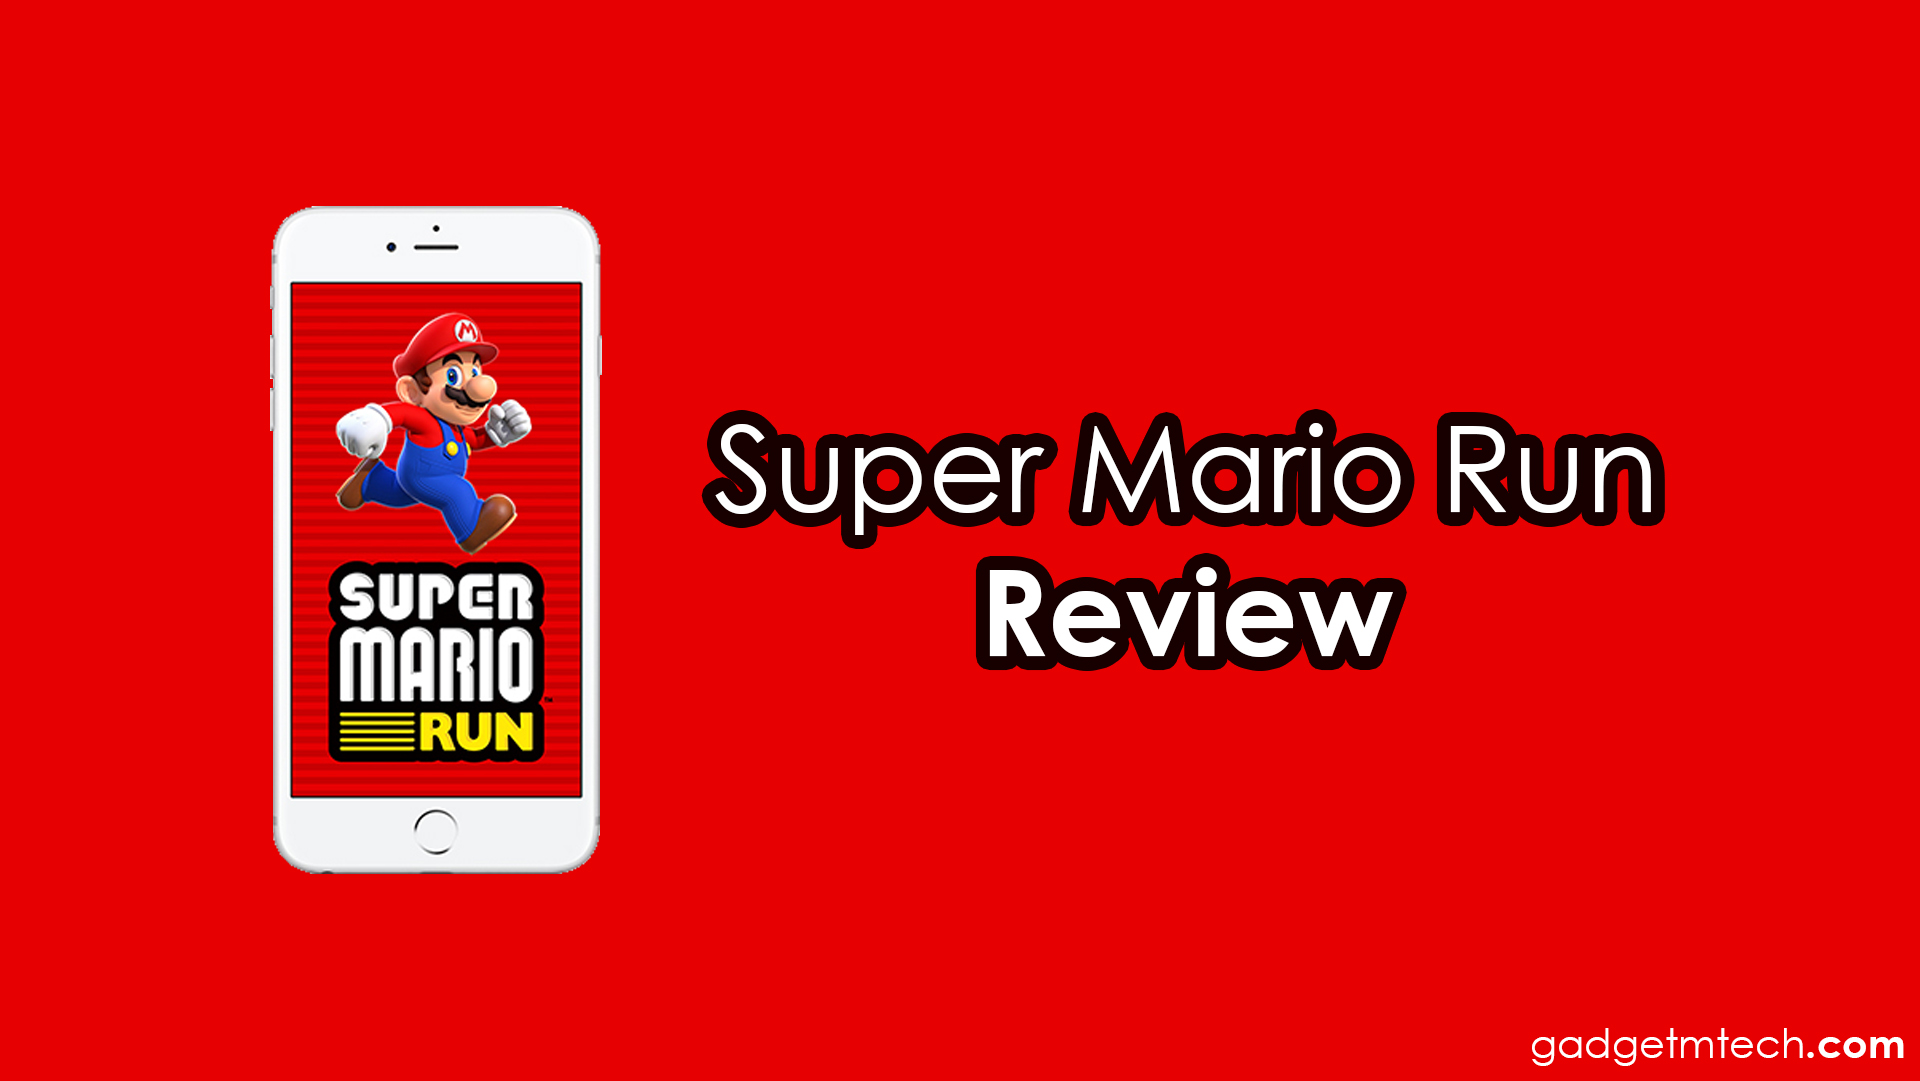 Super Mario Run Review: It’s Me, Mario!